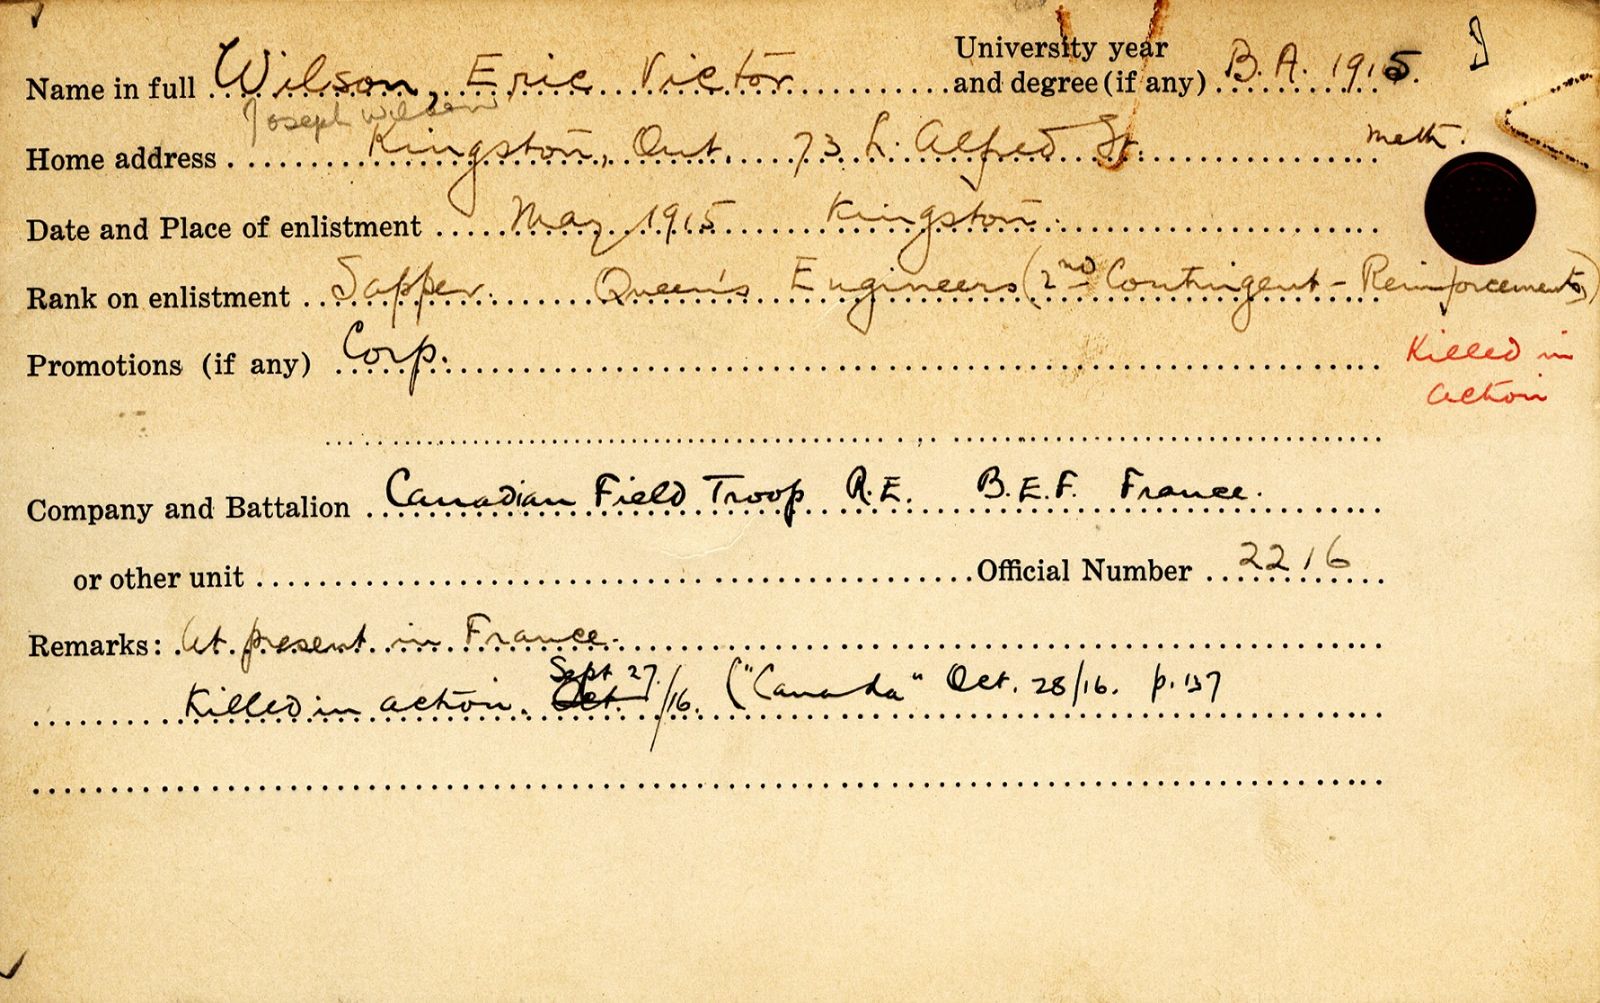 University Military Service Record of Wilson